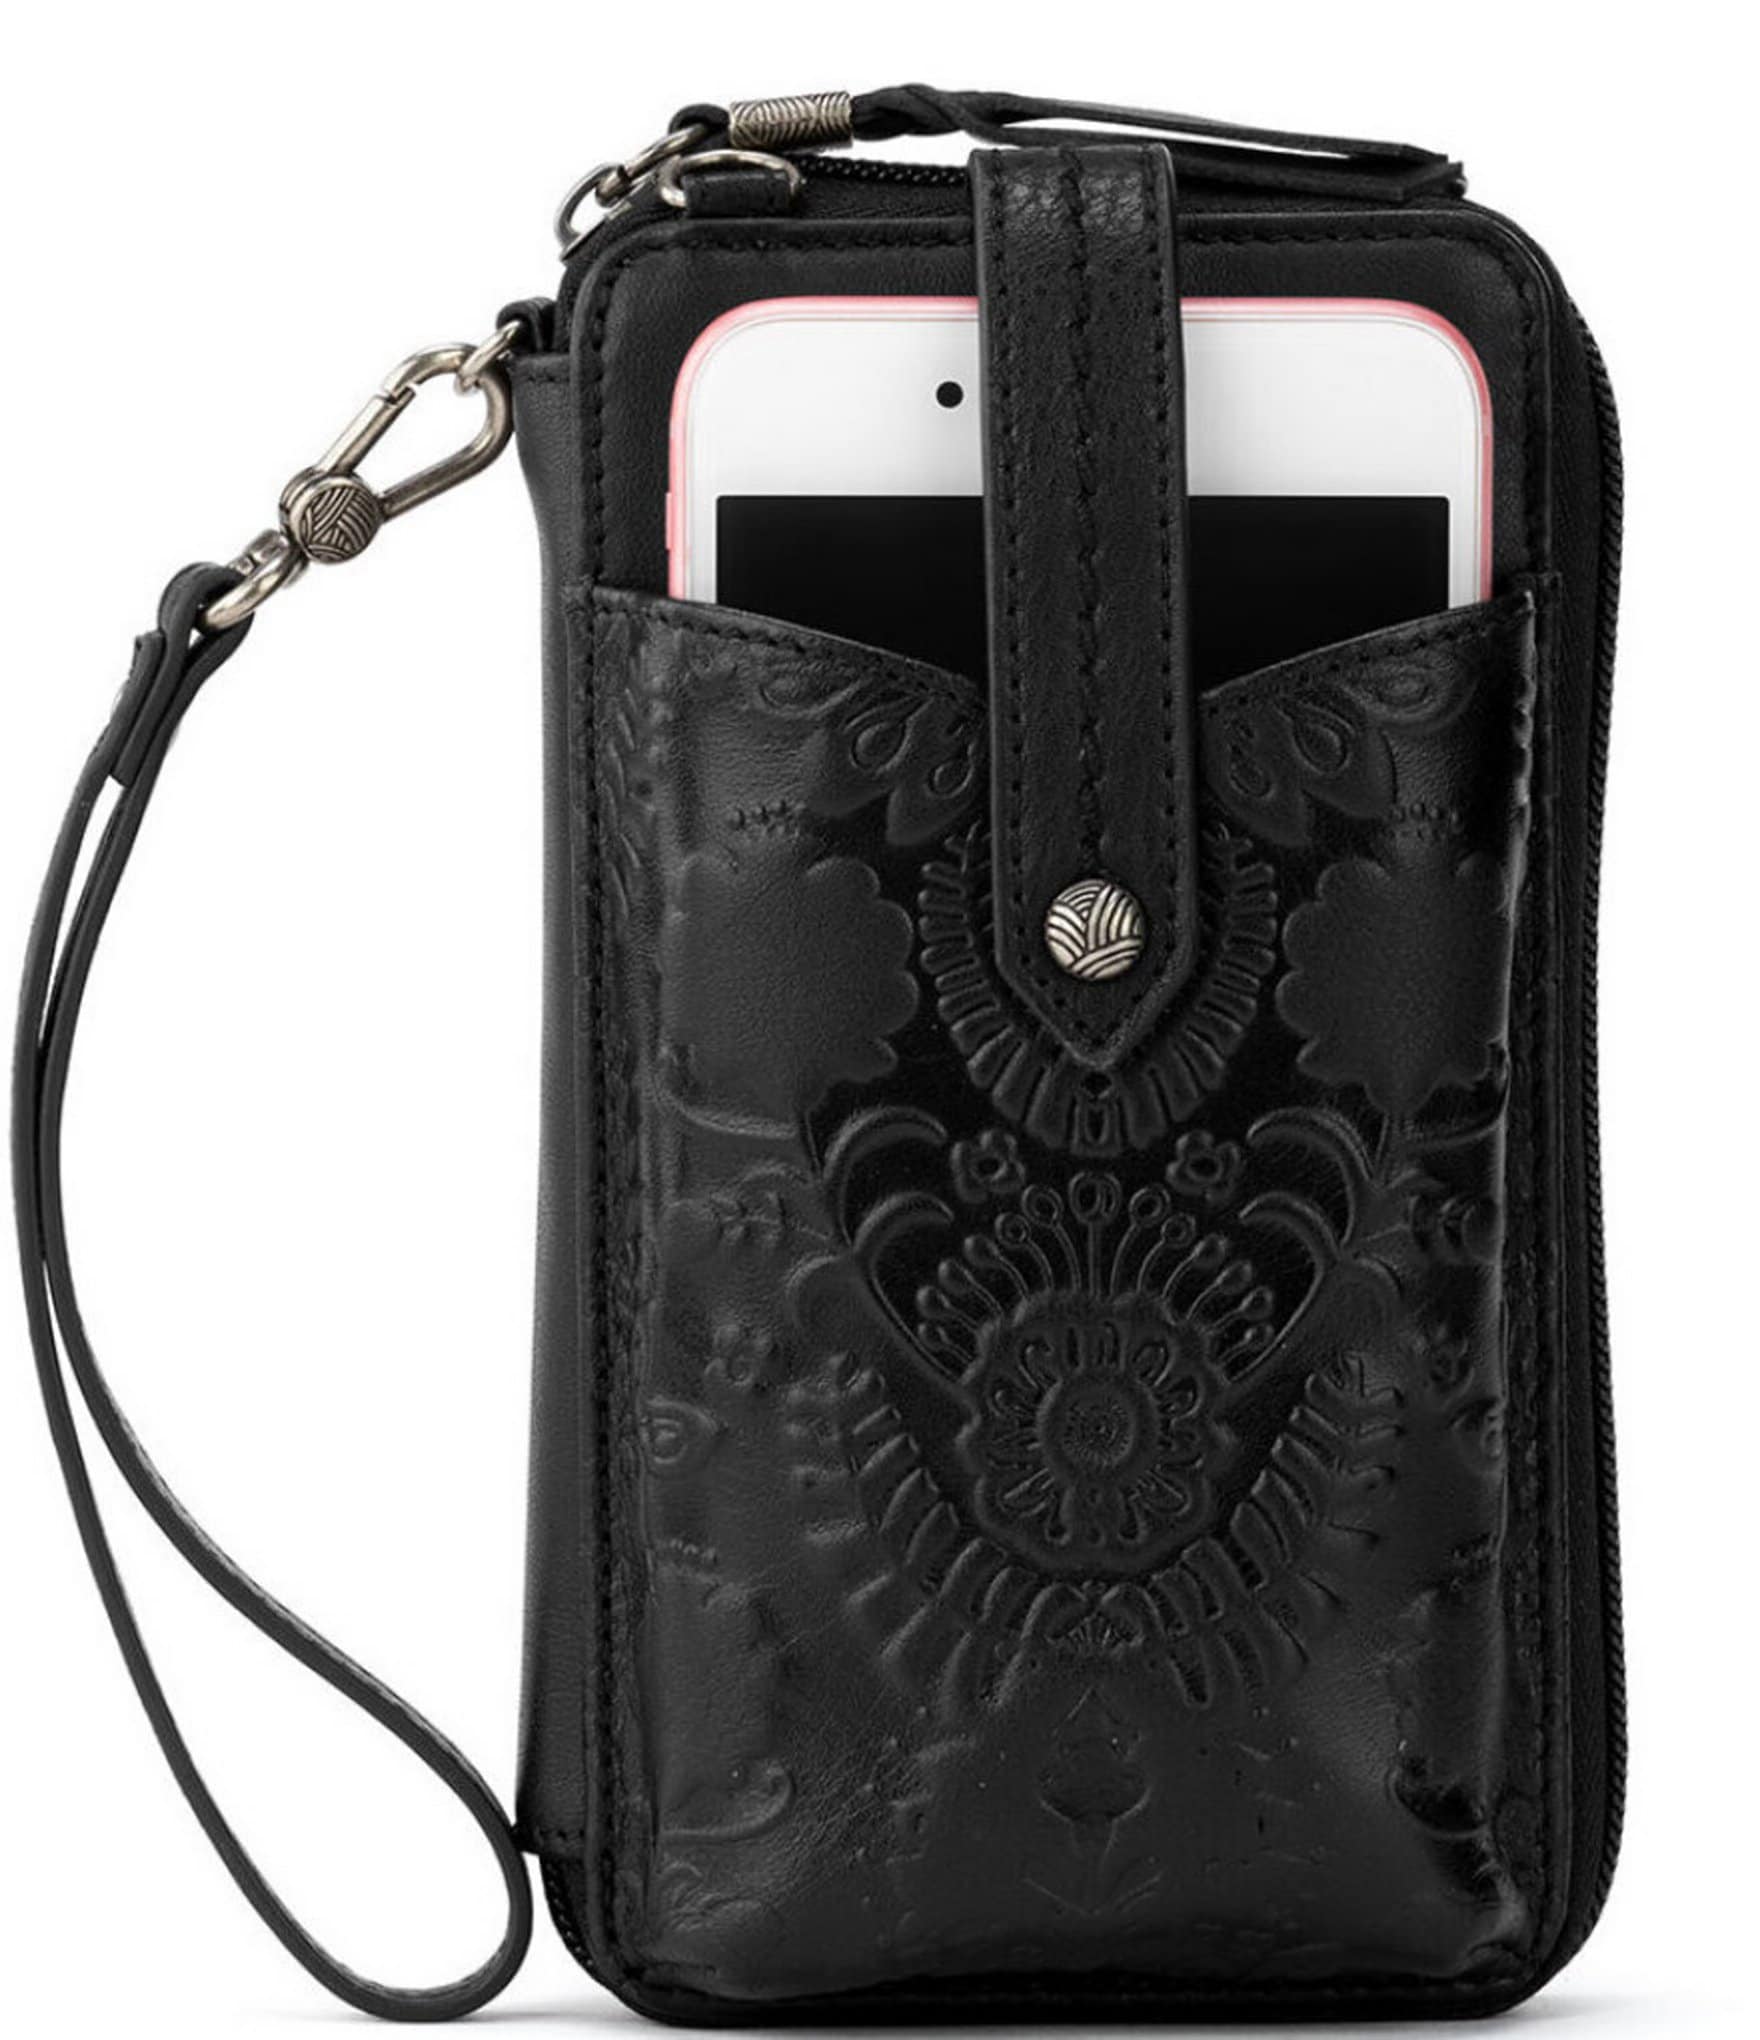 The Leather Smartphone Crossbody Bag